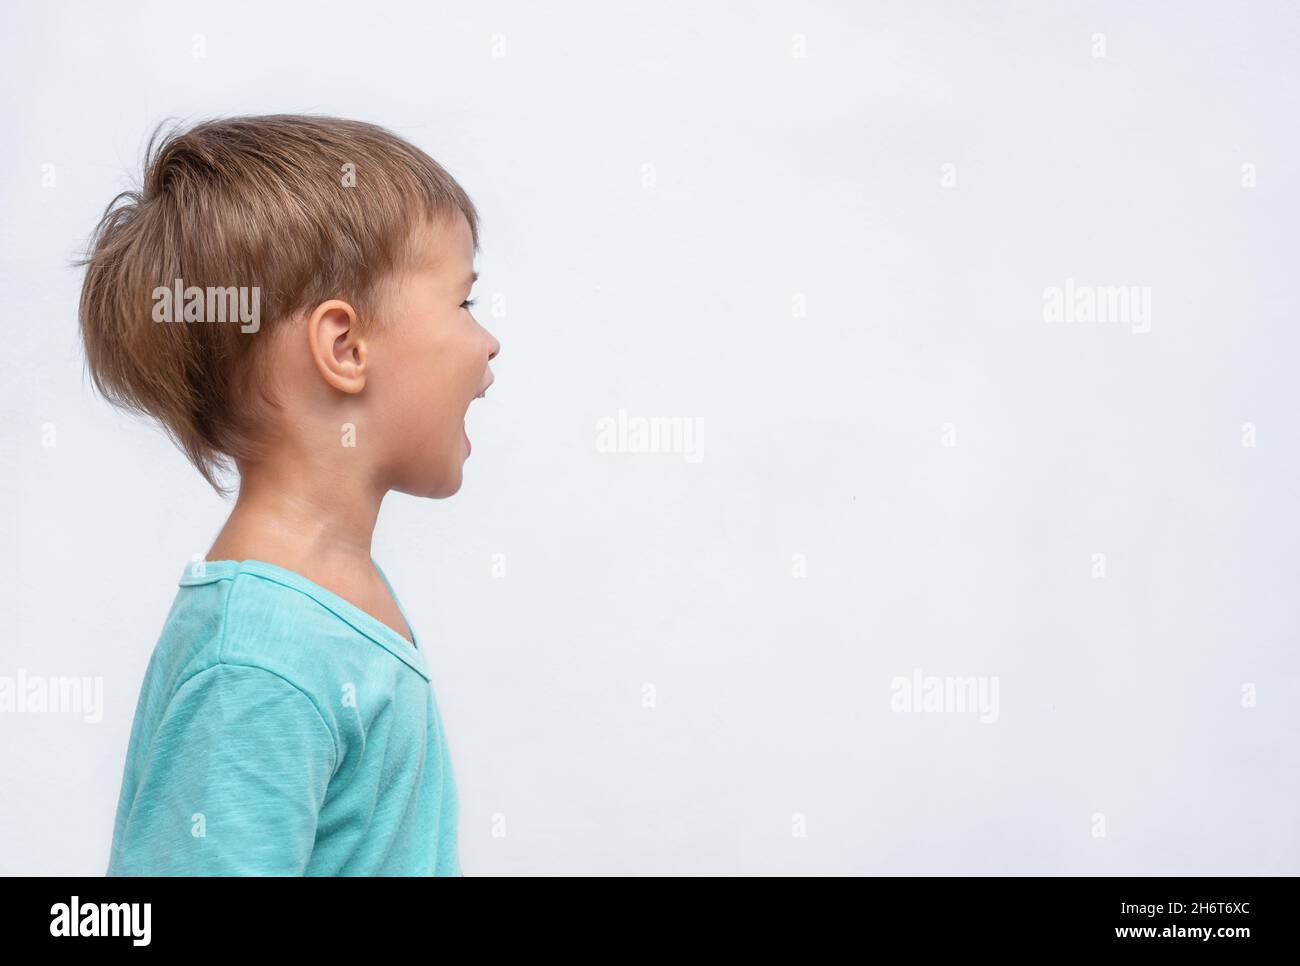 Happy child portrait in profile on gray background Stock Photo